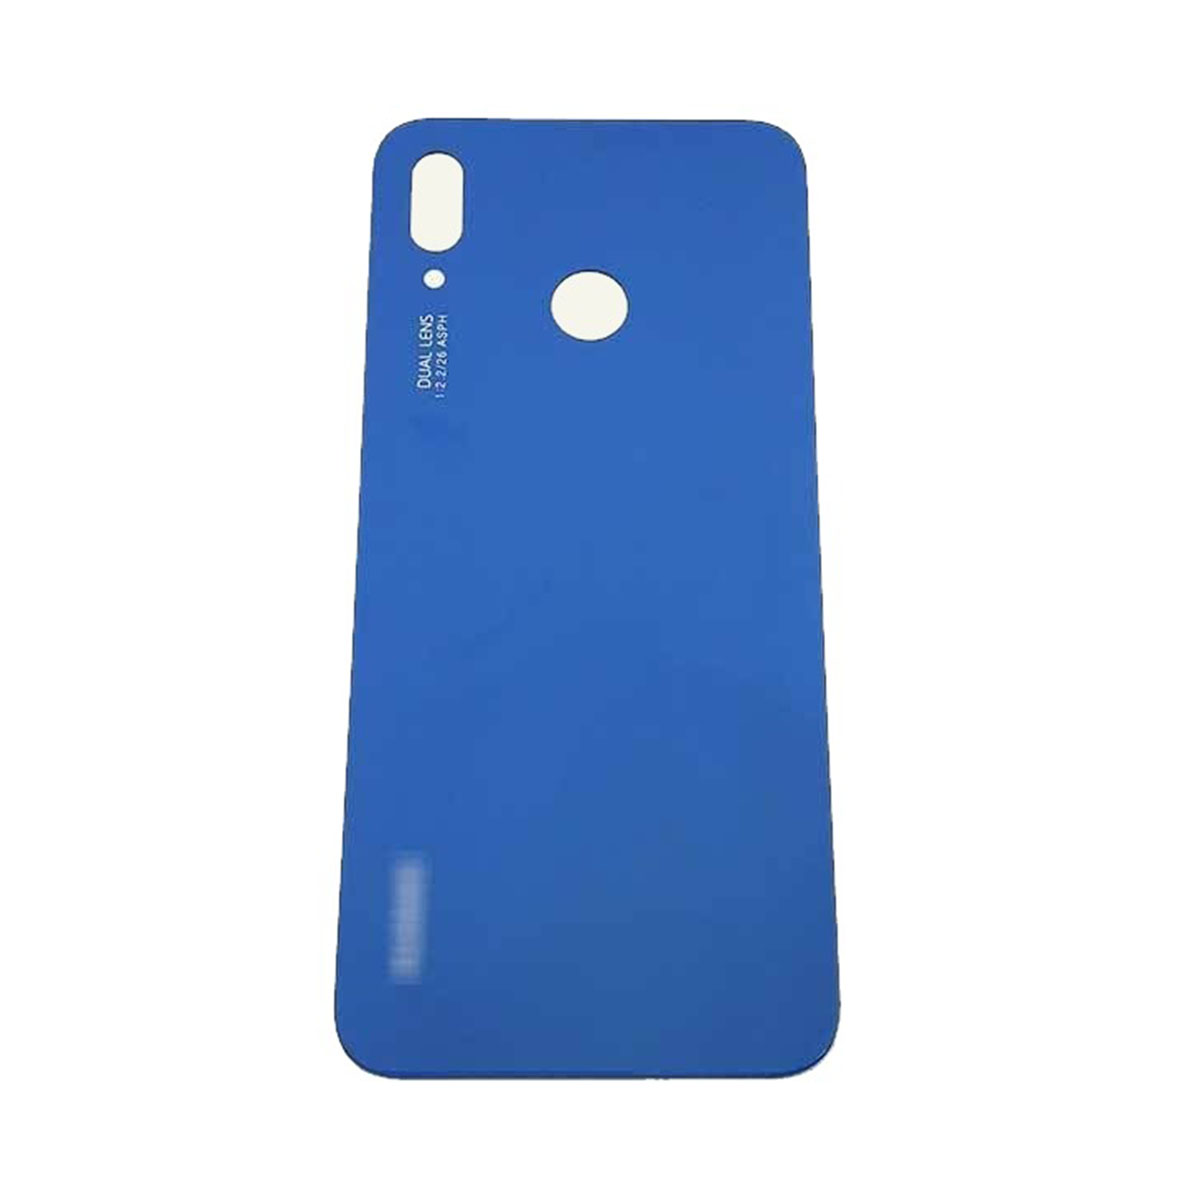 Huawei P20 lite, zadne sklo modré